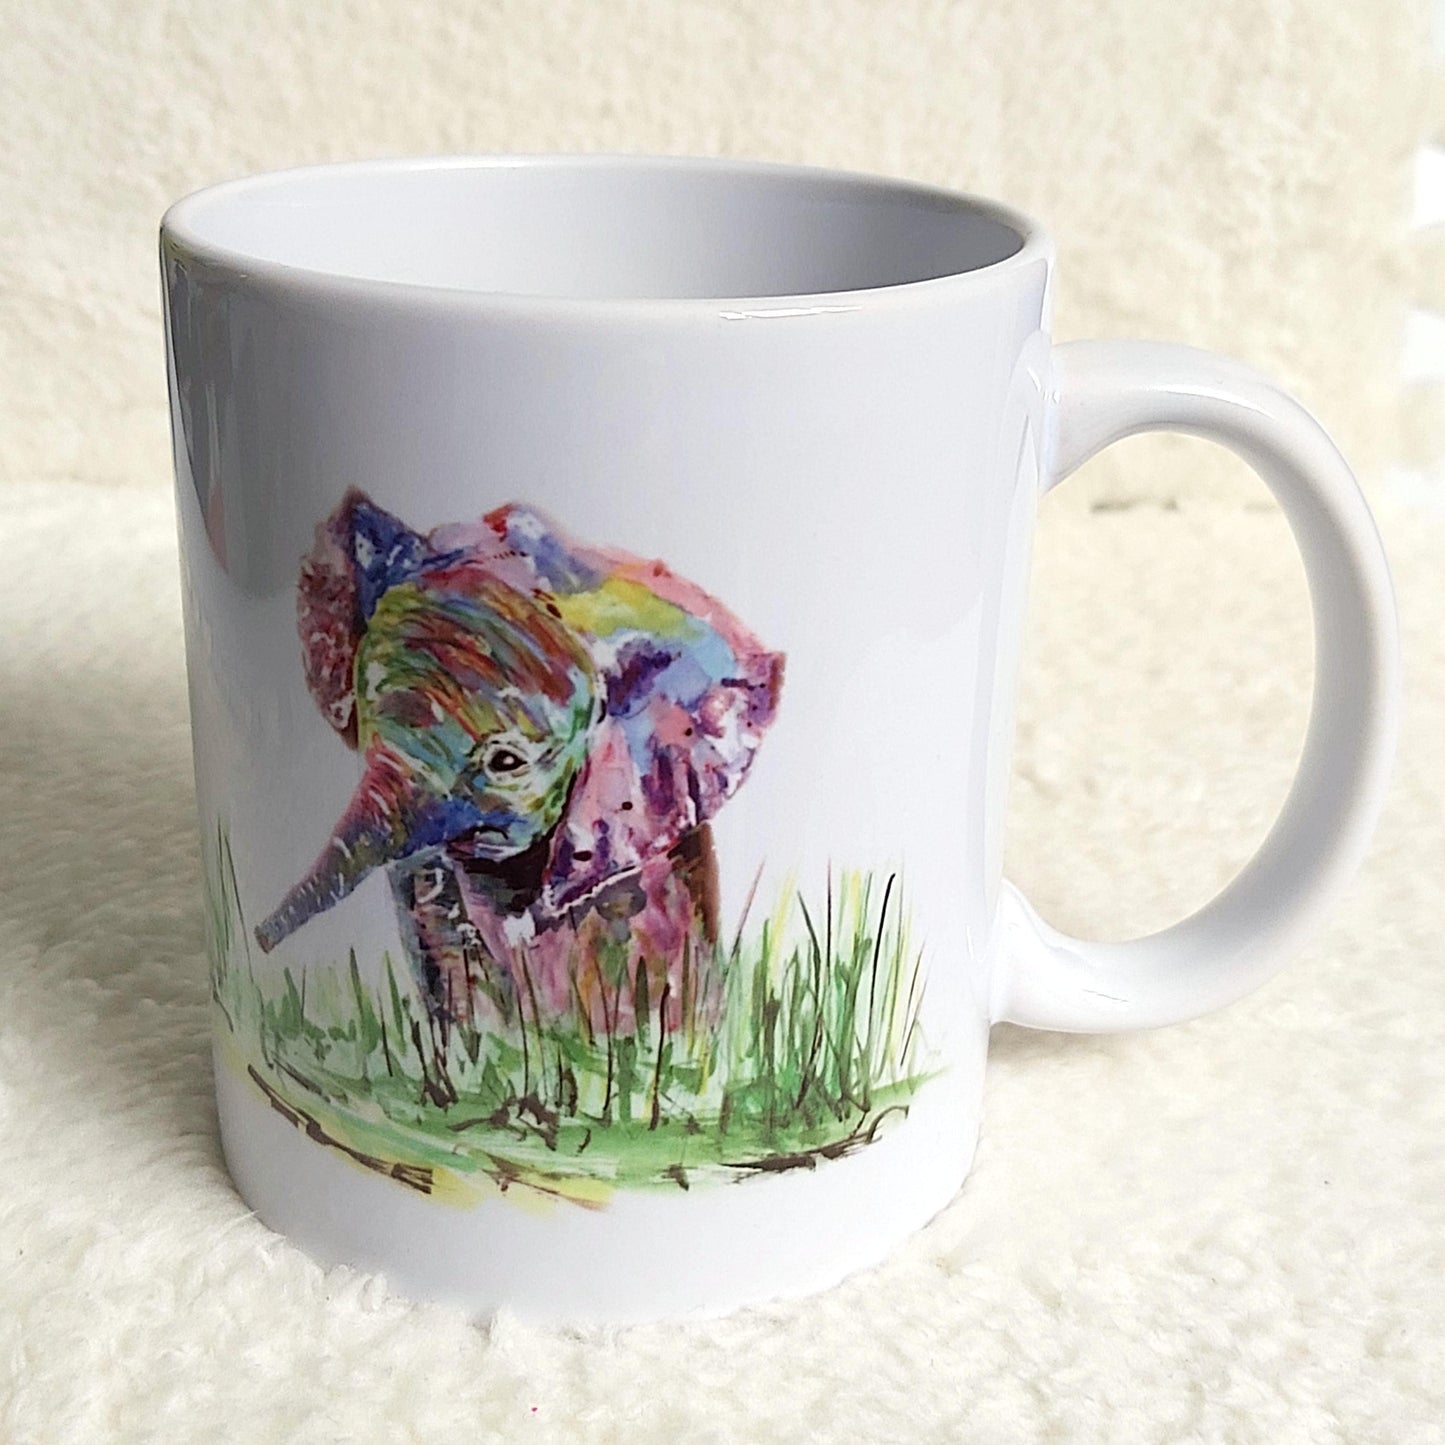 Watercolour elephant mug - Sew Tilley